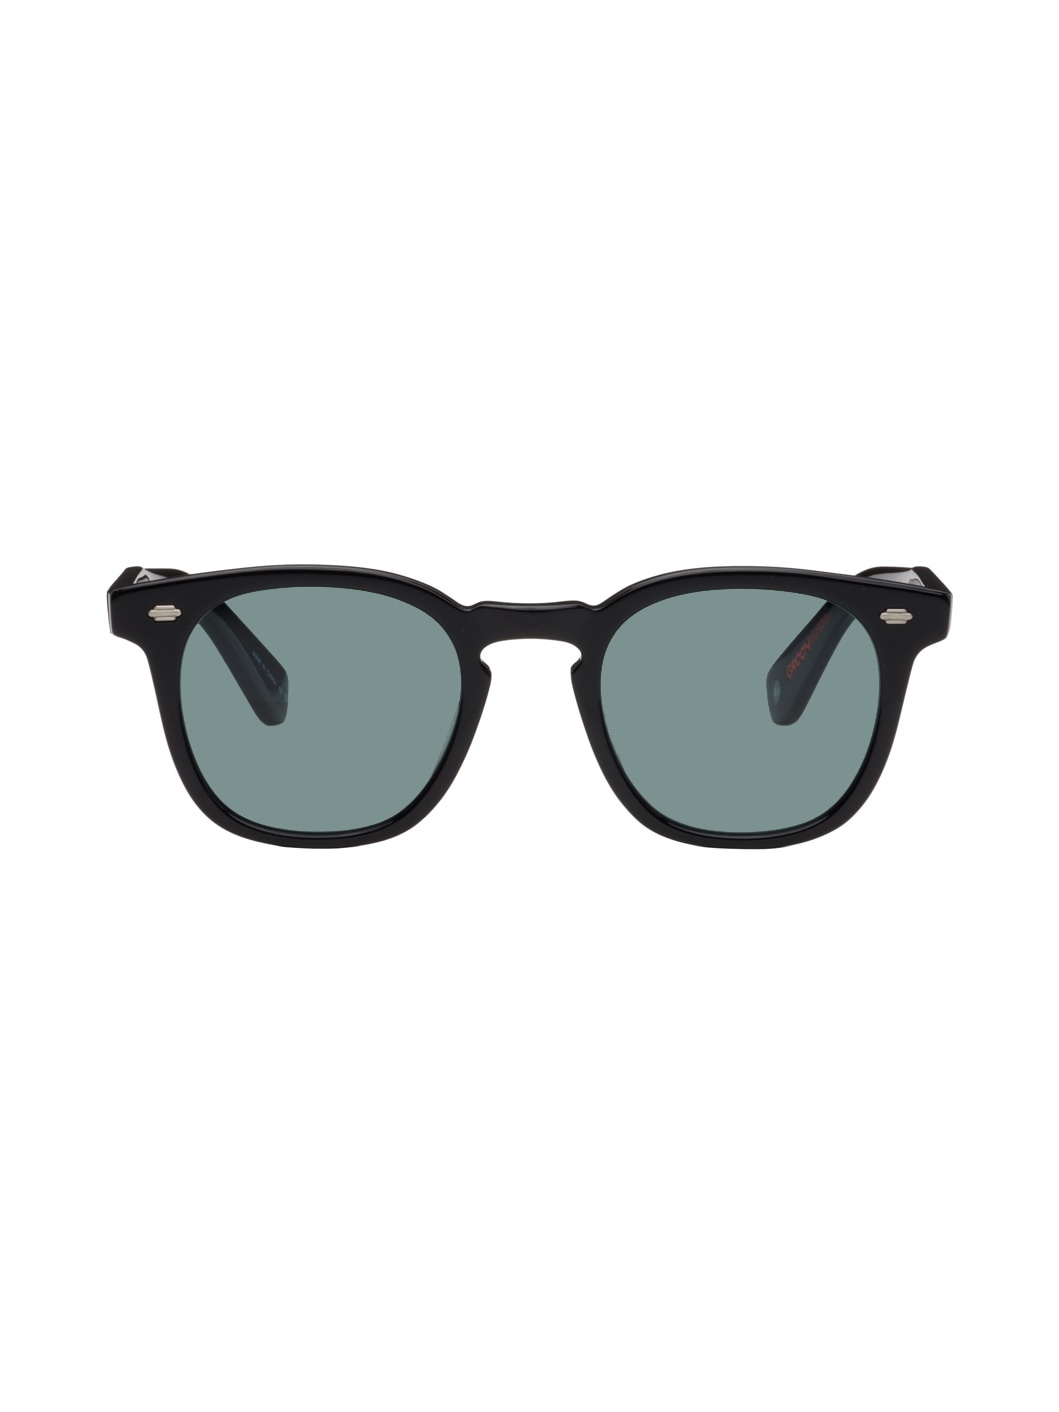 Black Byrne Sunglasses - 1